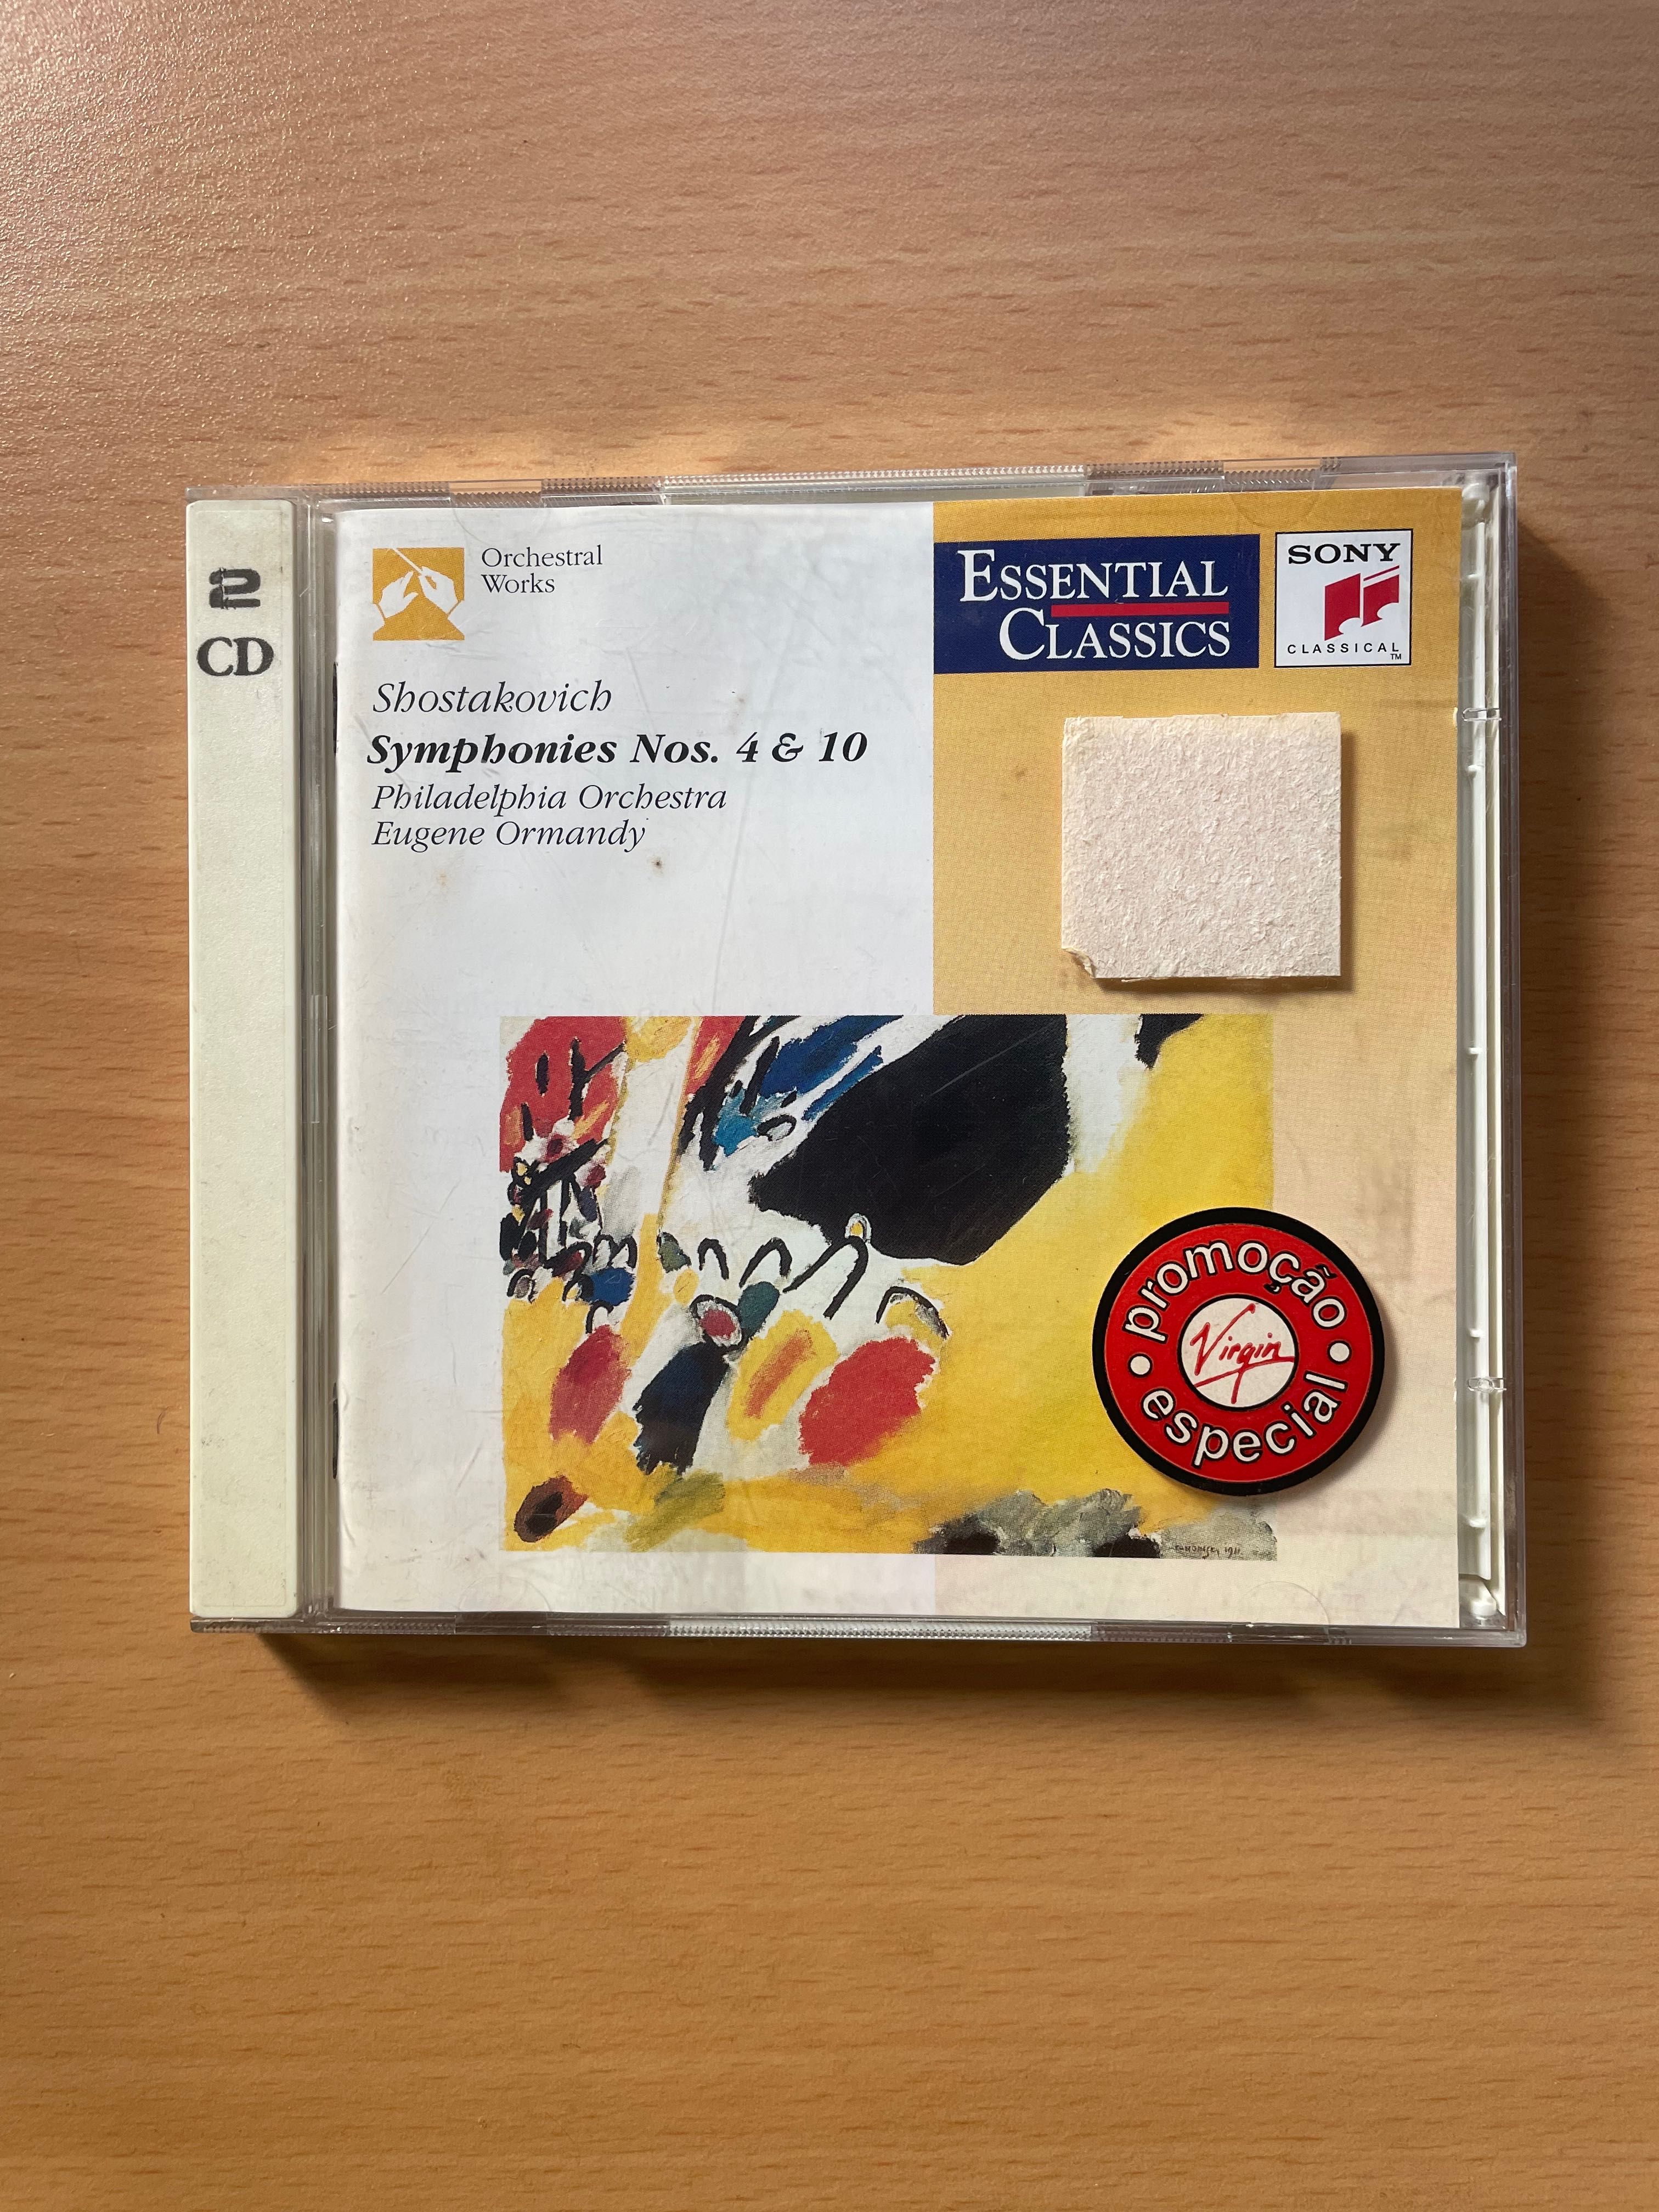 CD duplo Shostakovich: Ormandy: Symphonies Nos. 4 & 10